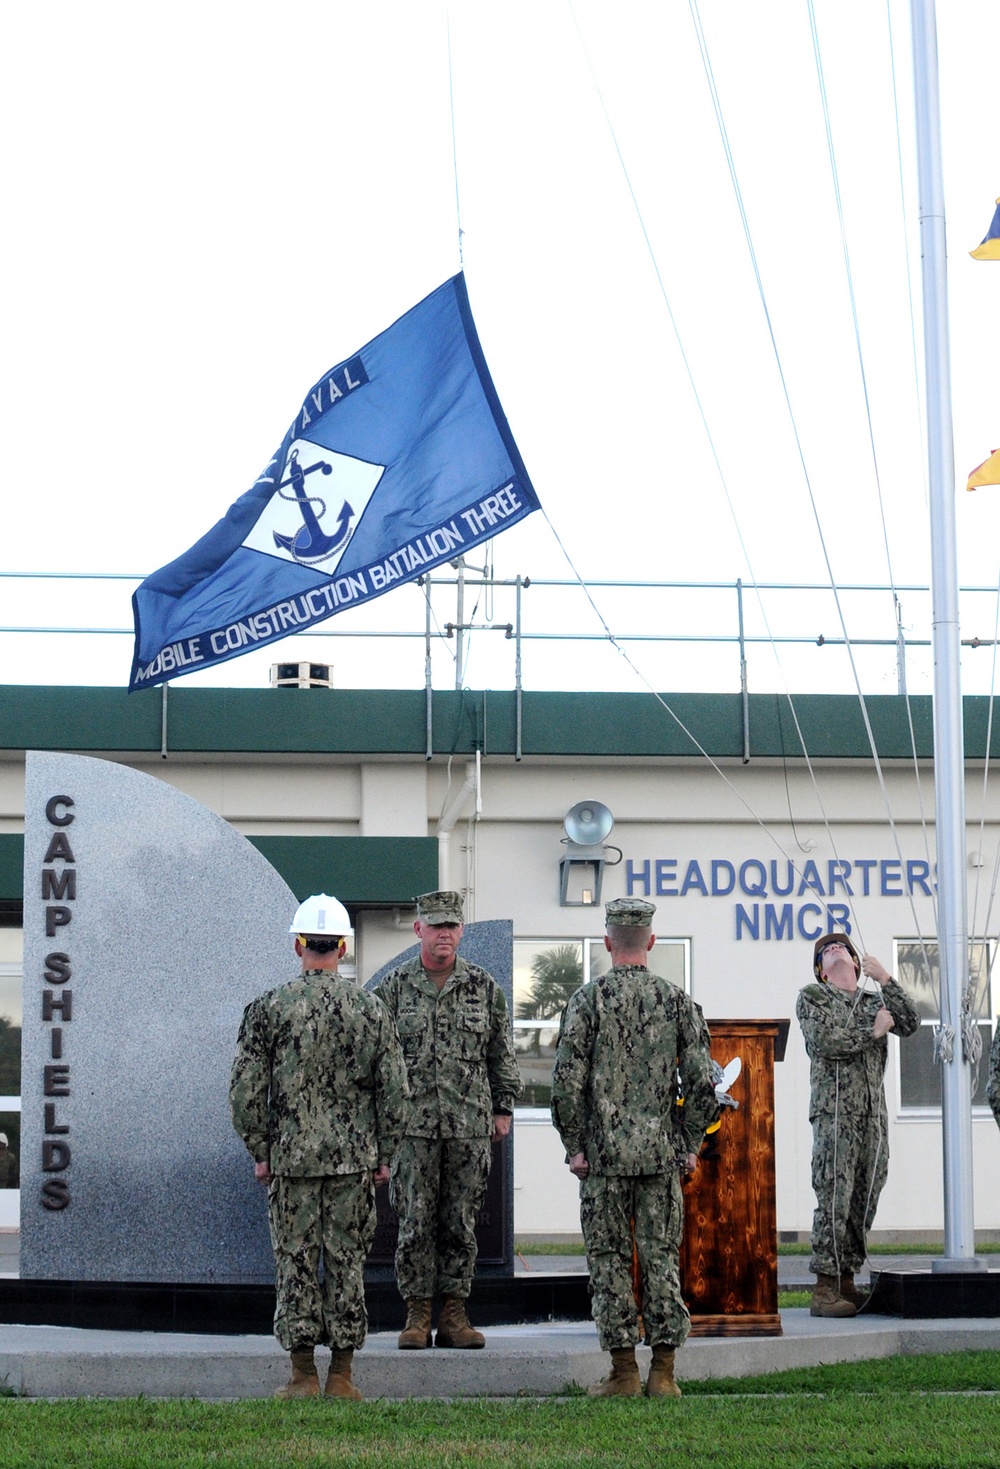 Seabee Camp Shields battalion turnover